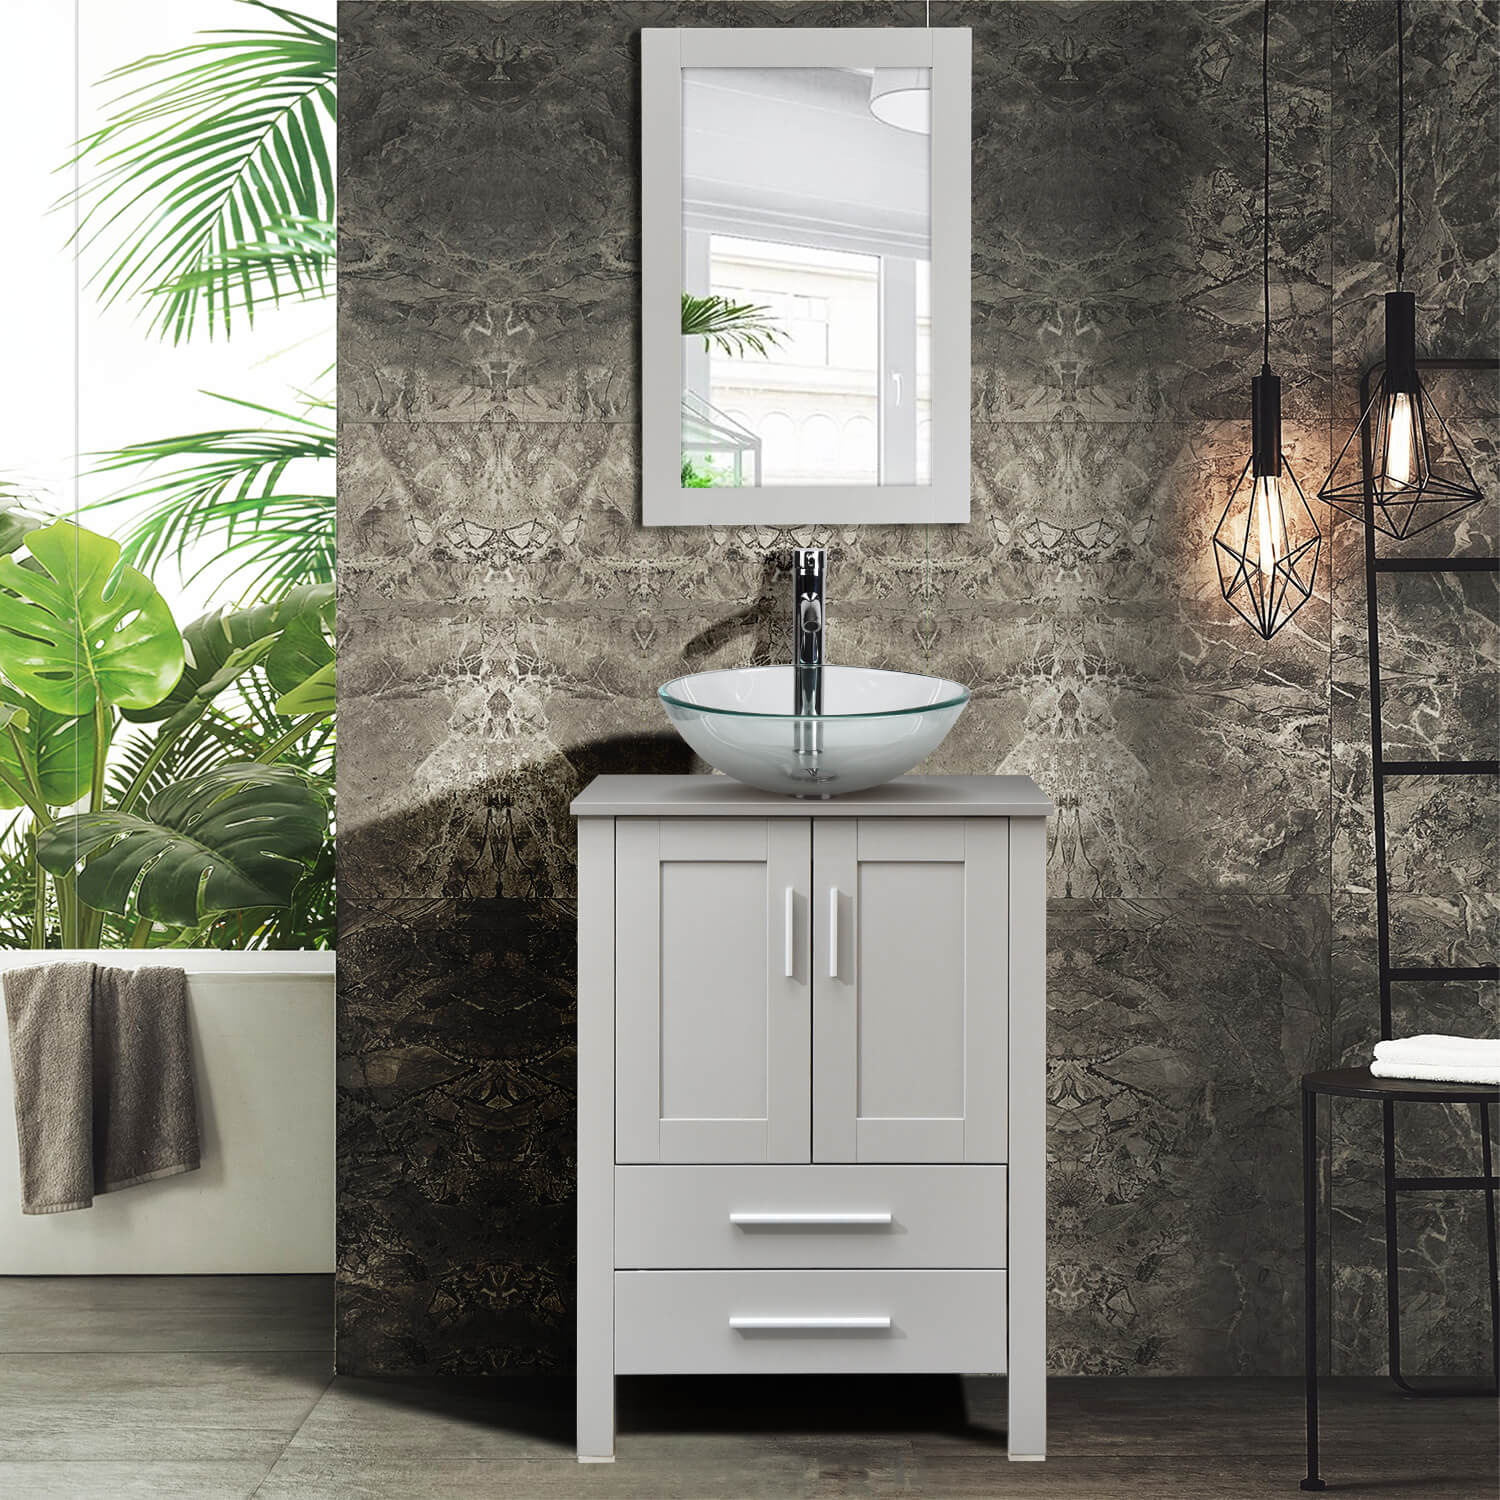 Elecwish gray wood bathroom vanity with round clear sink in bathroom